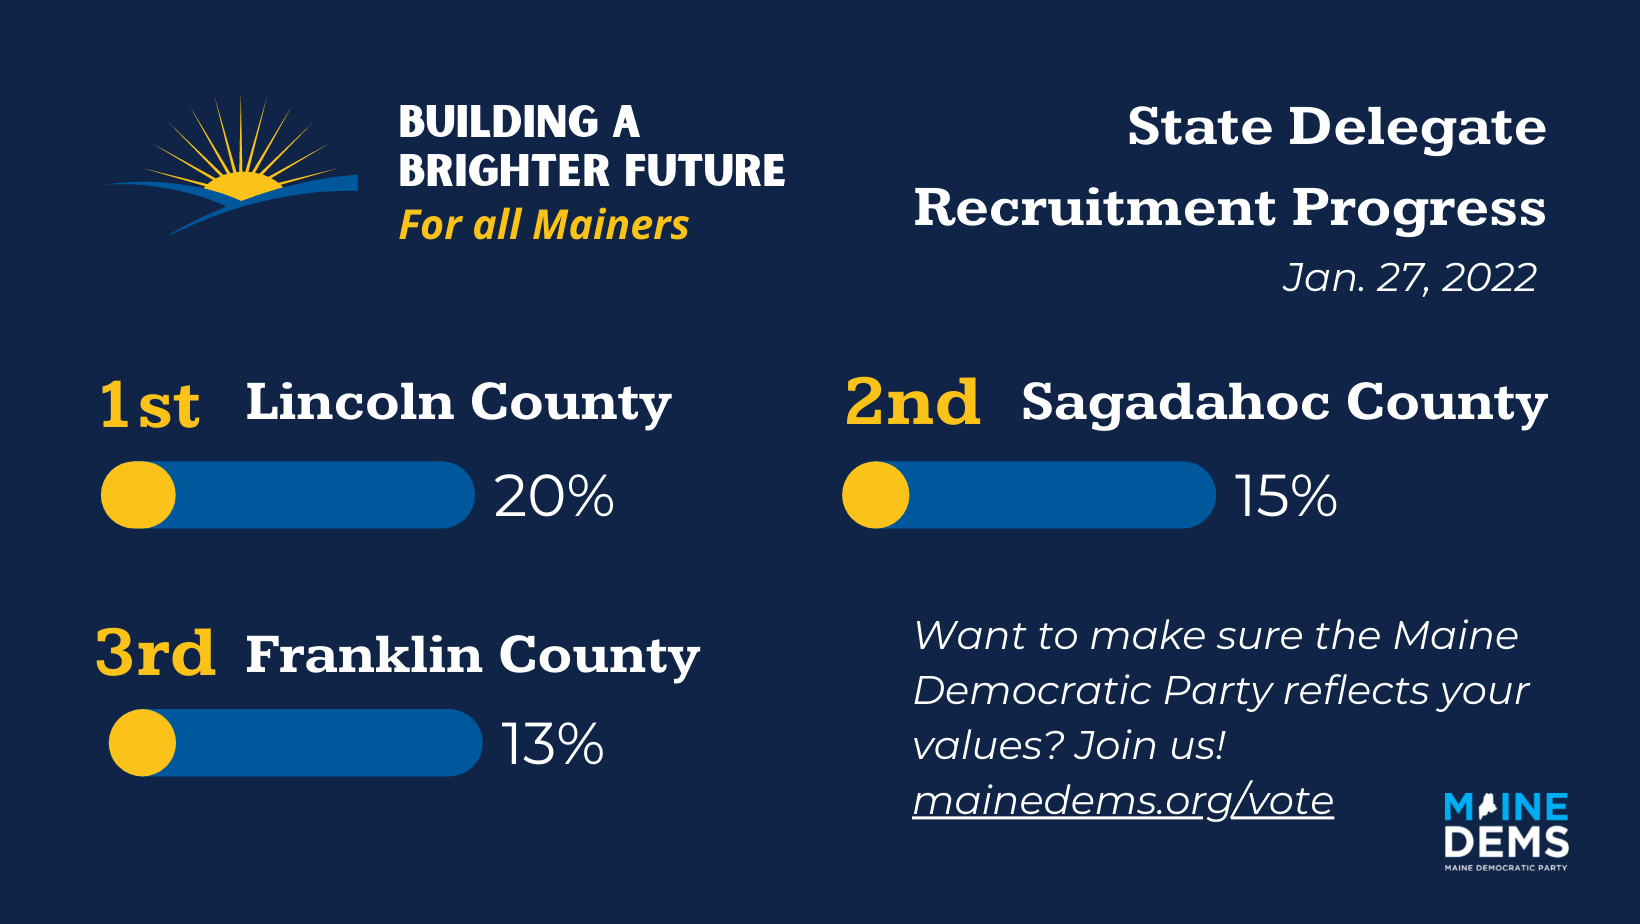 State Delegate Recruitment Progress